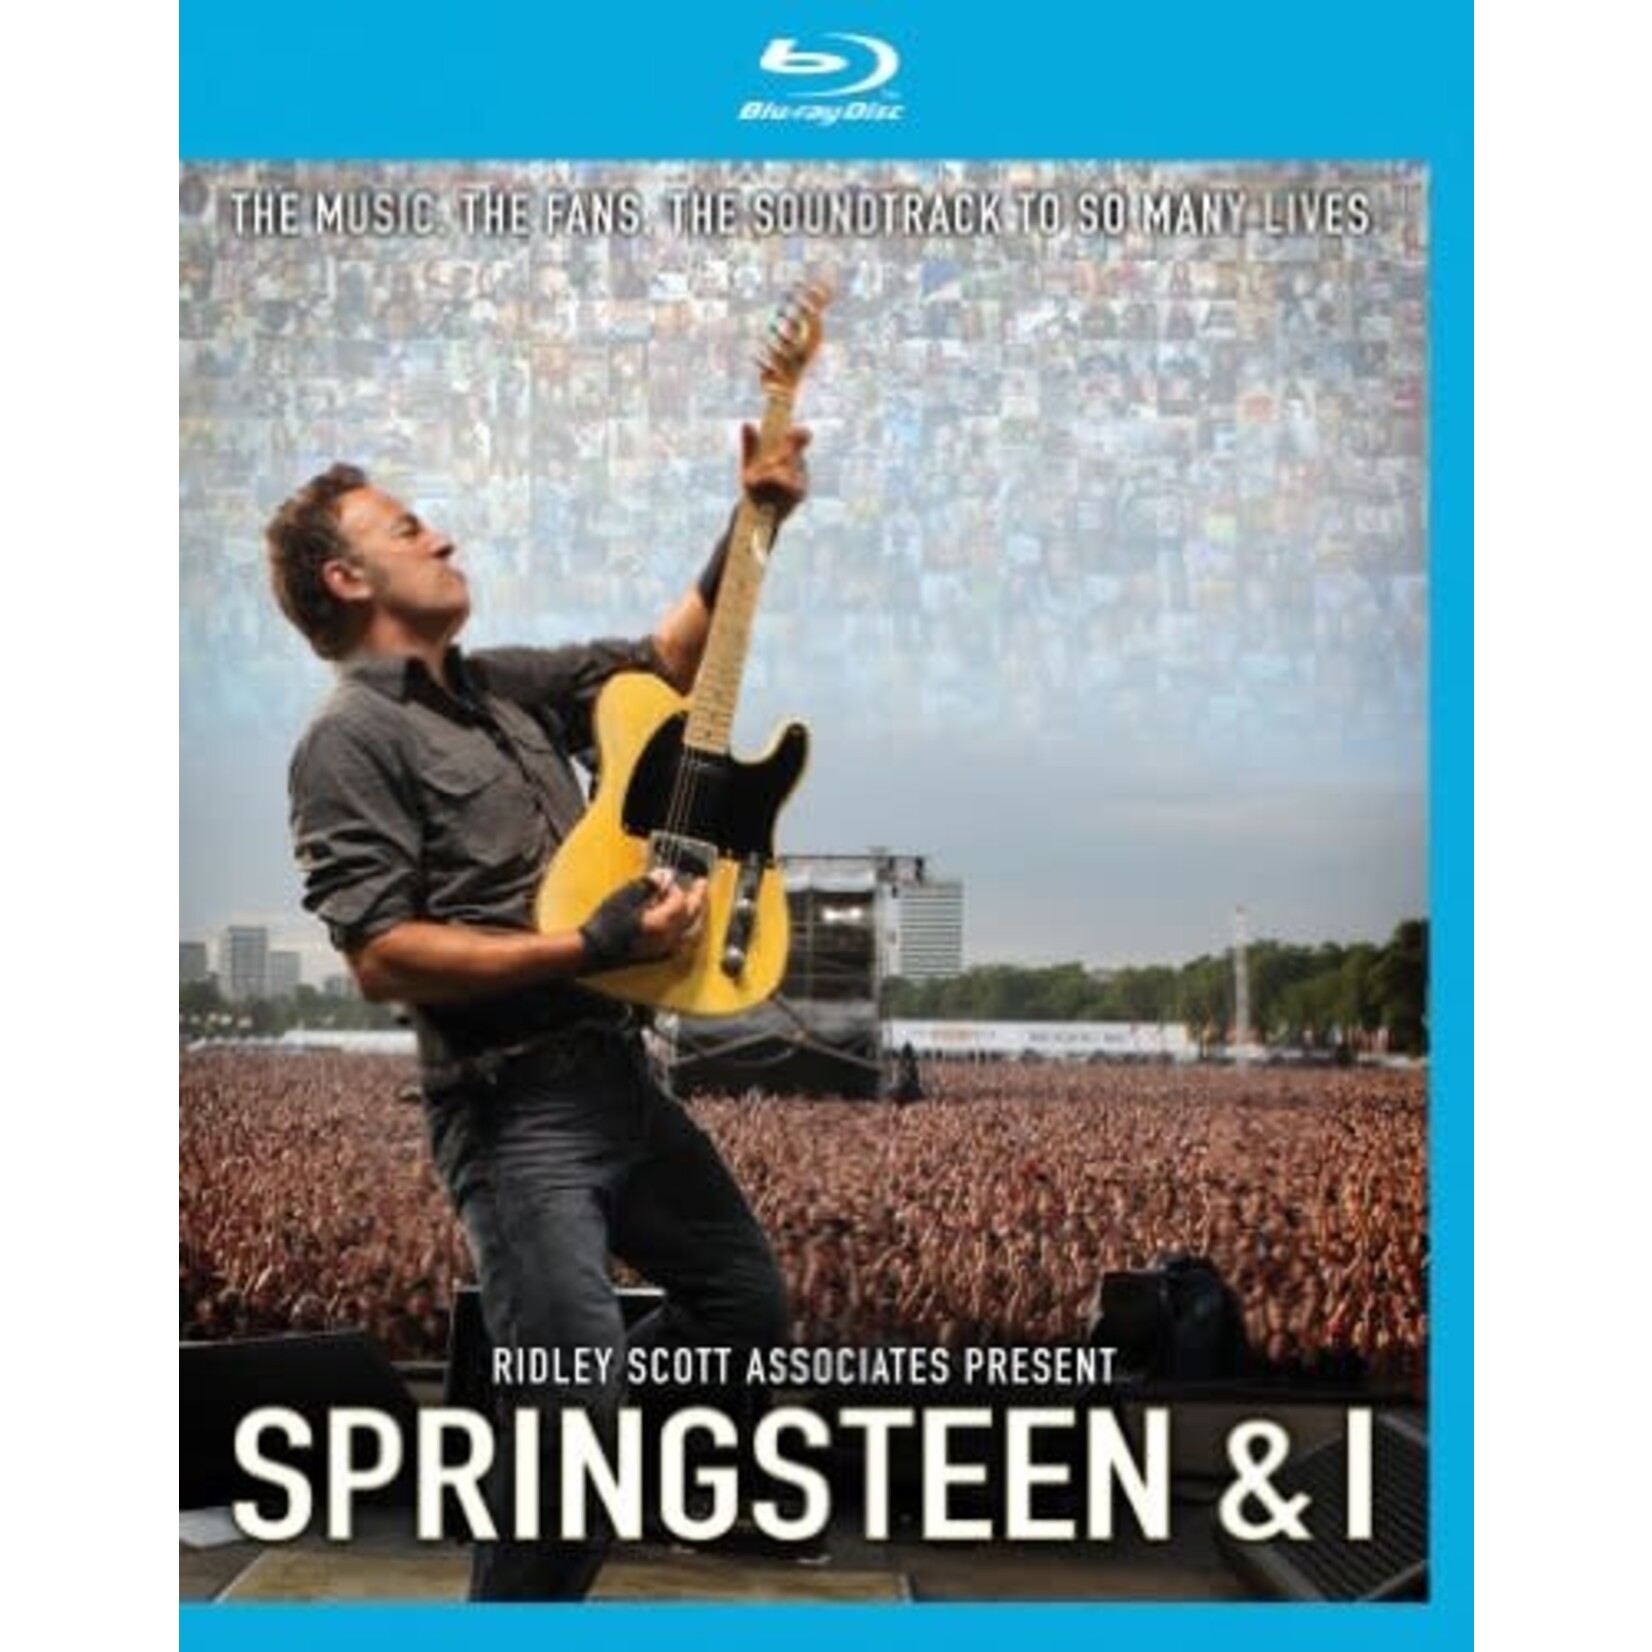 Bruce Springsteen - Springsteen & I [USED BRD]